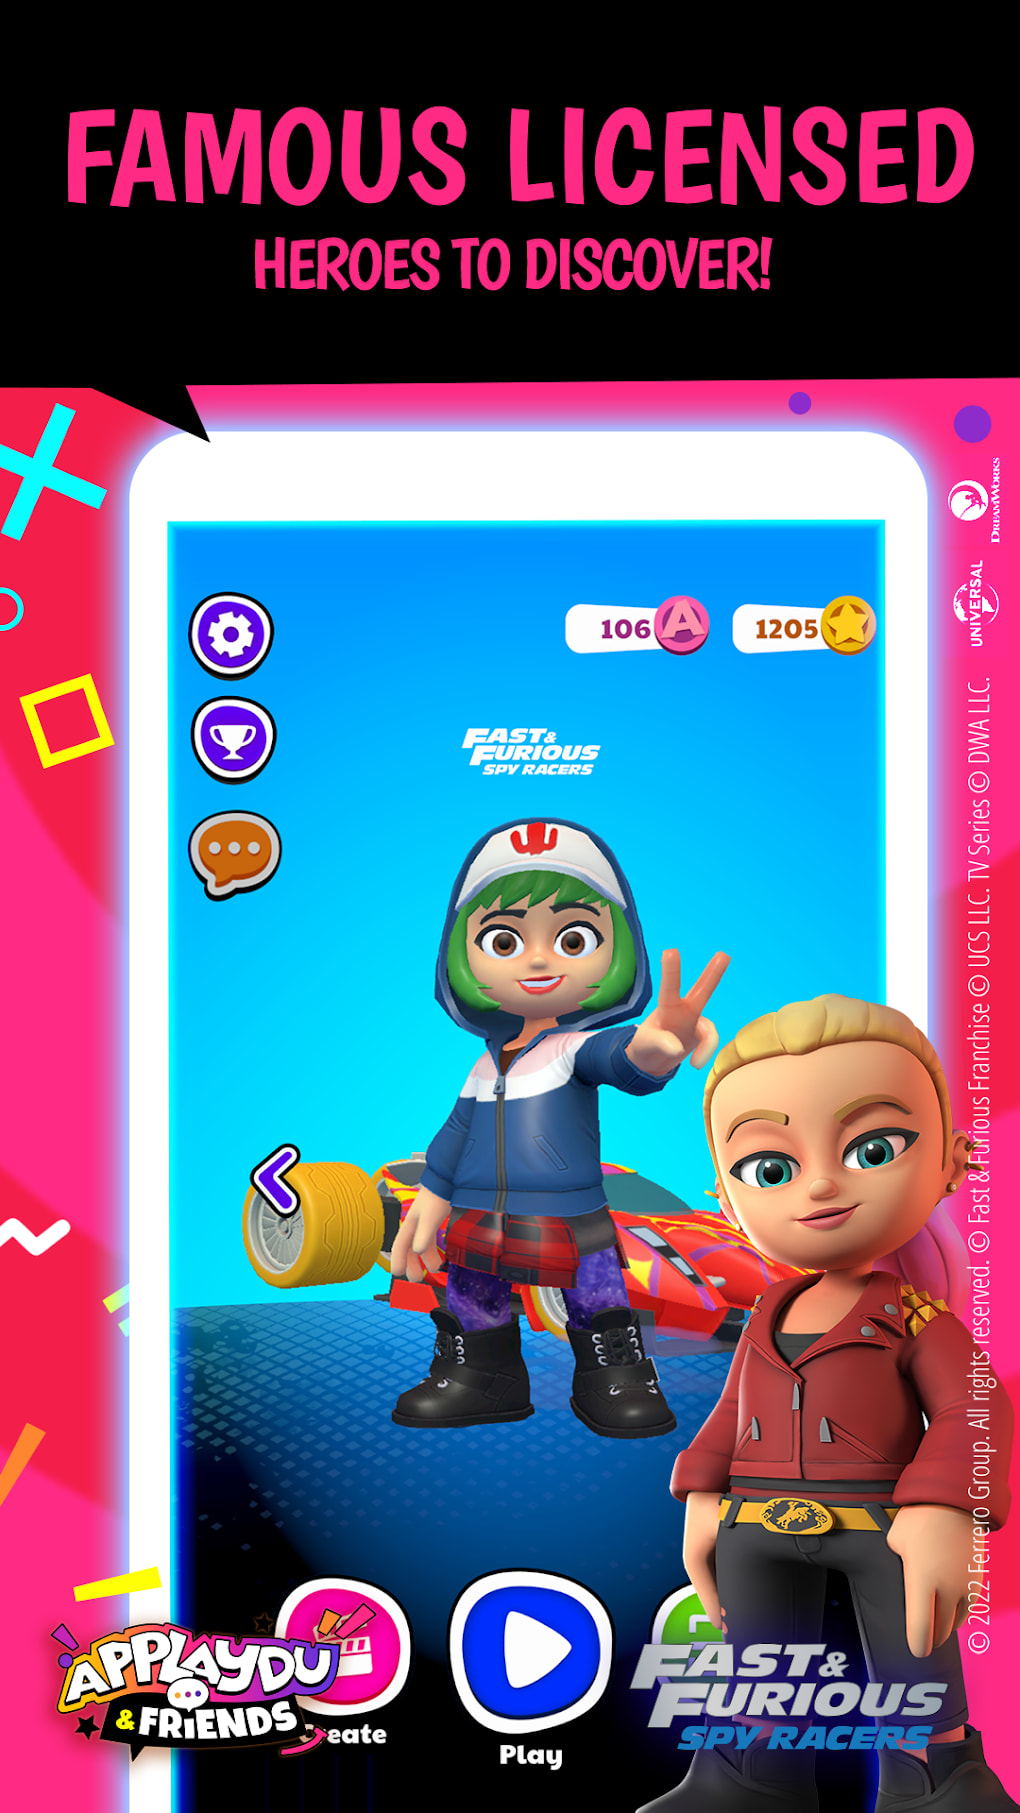 Applaydu: Jogos para a Família – Apps no Google Play